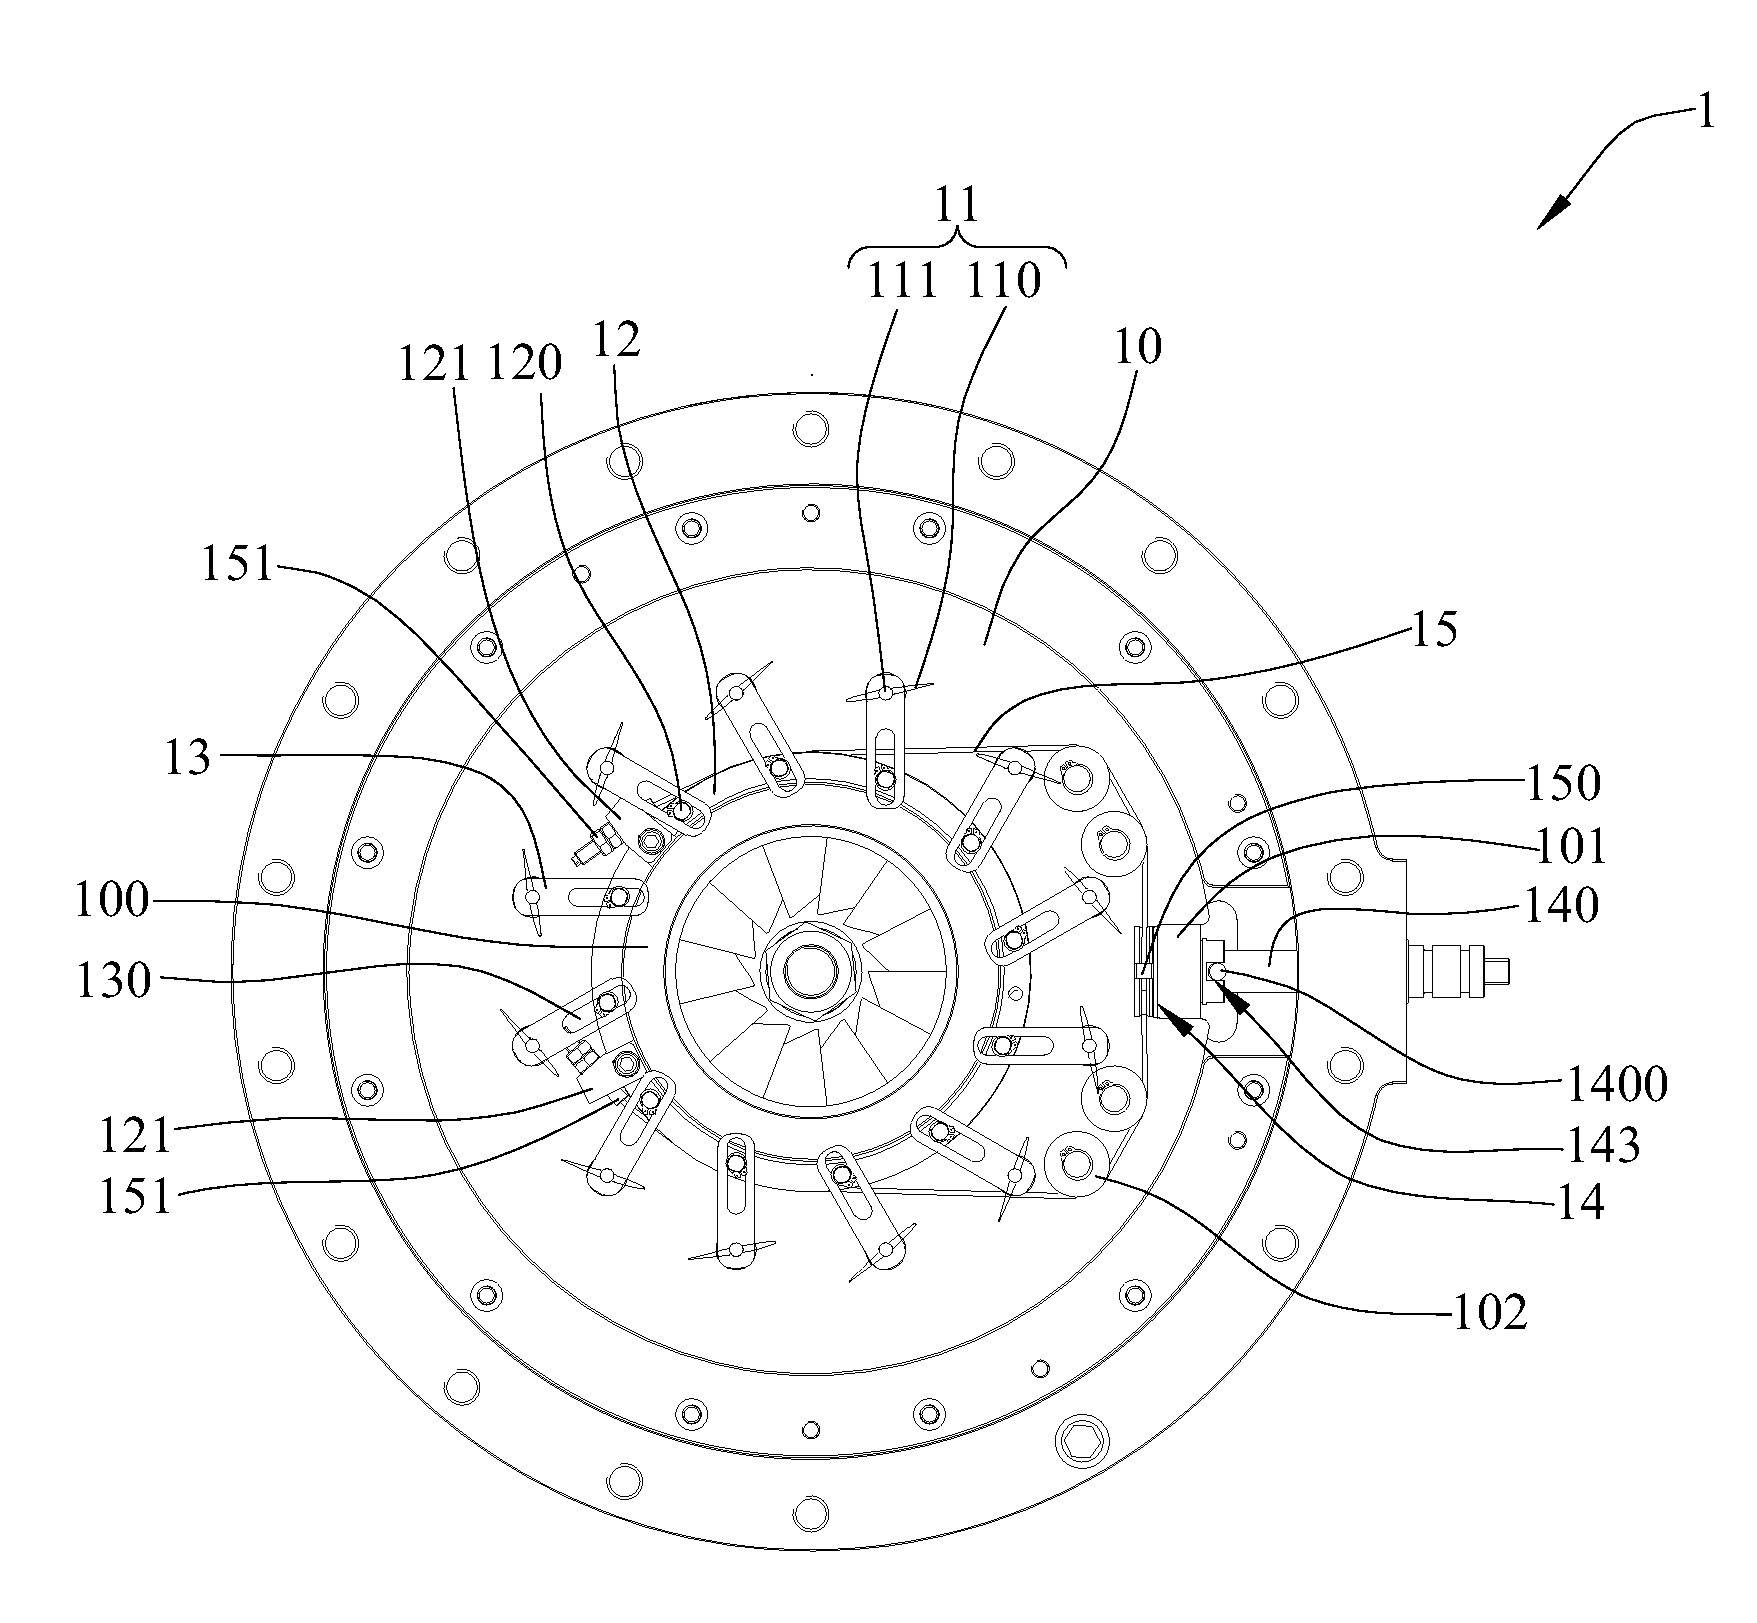 Mechanism for modulating diffuser vane of diffuser